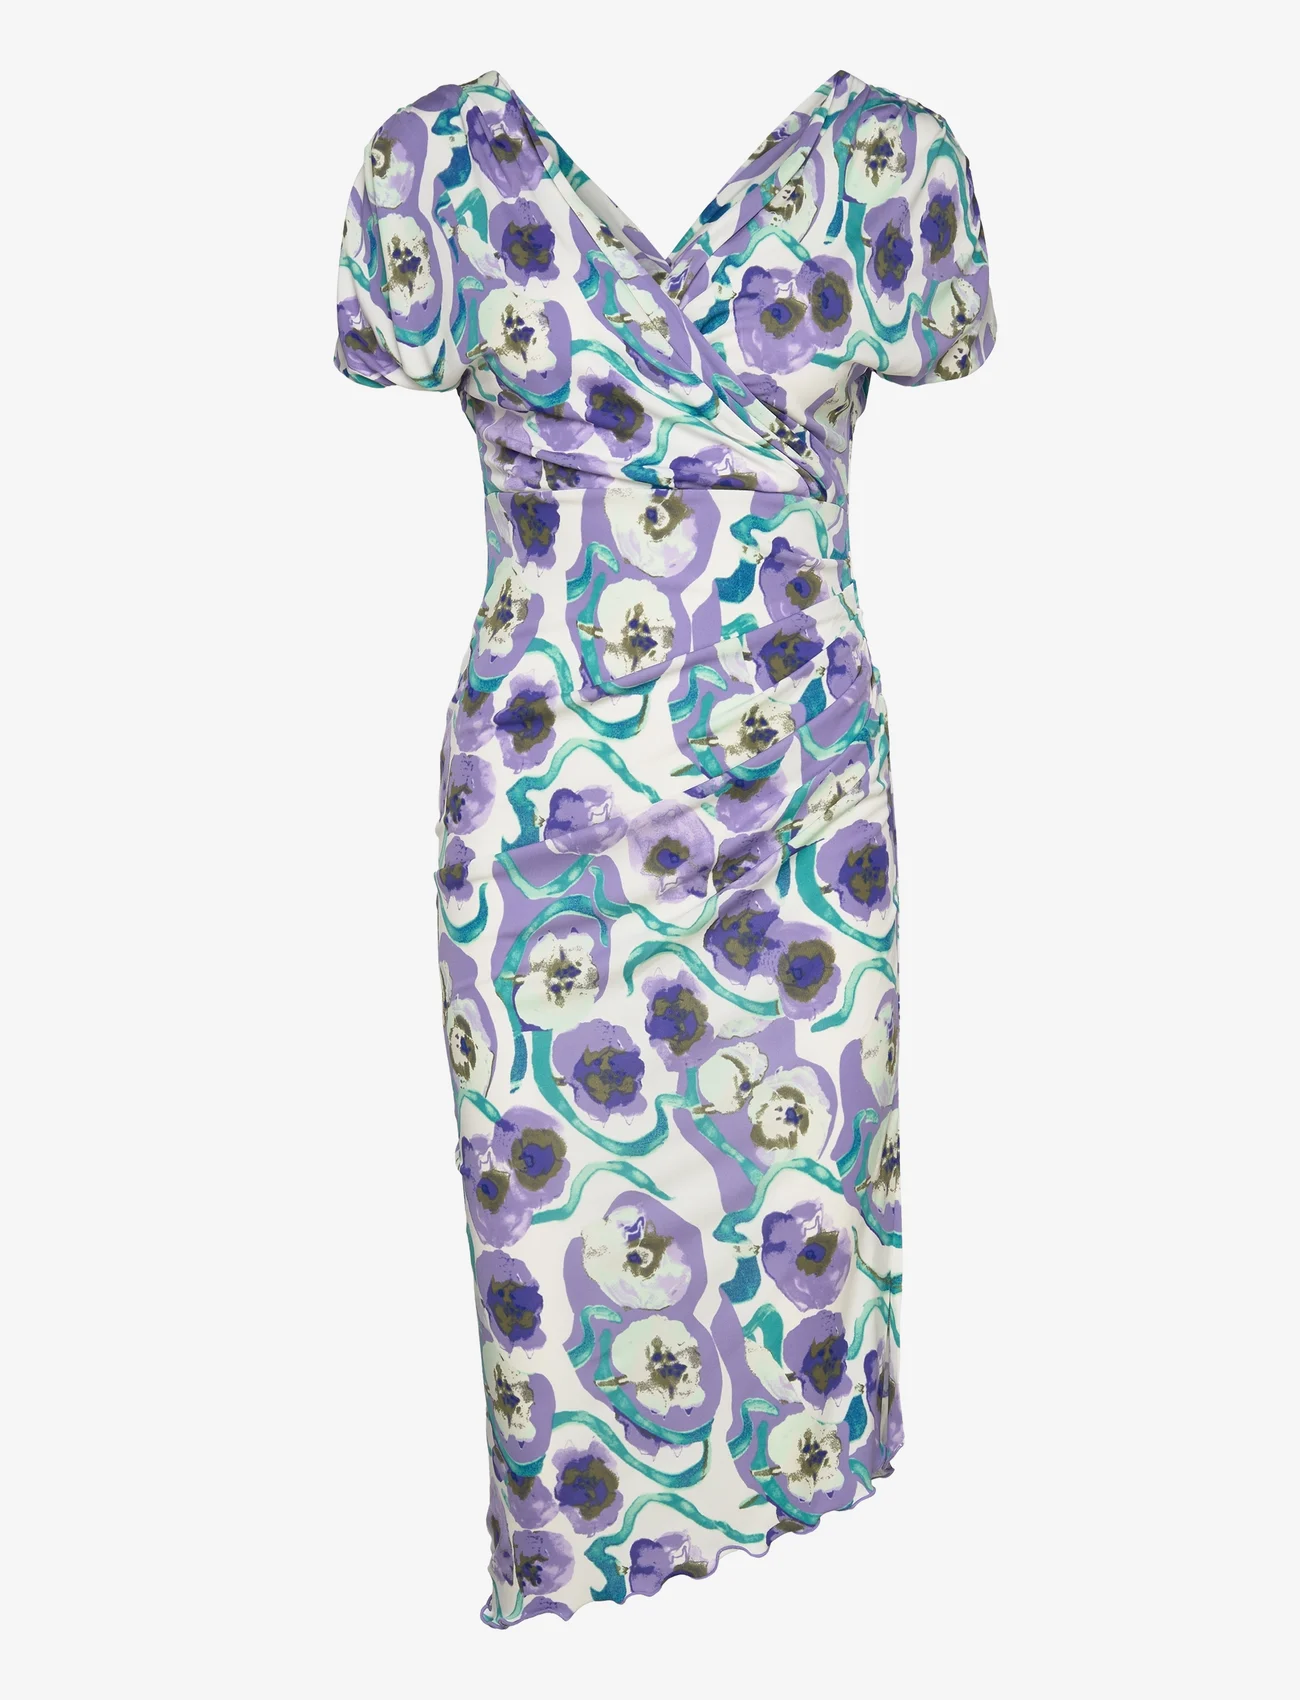 Diane von Furstenberg - DVF HAVANA DRESS - zomerjurken - watercolor blossom med purple - 0